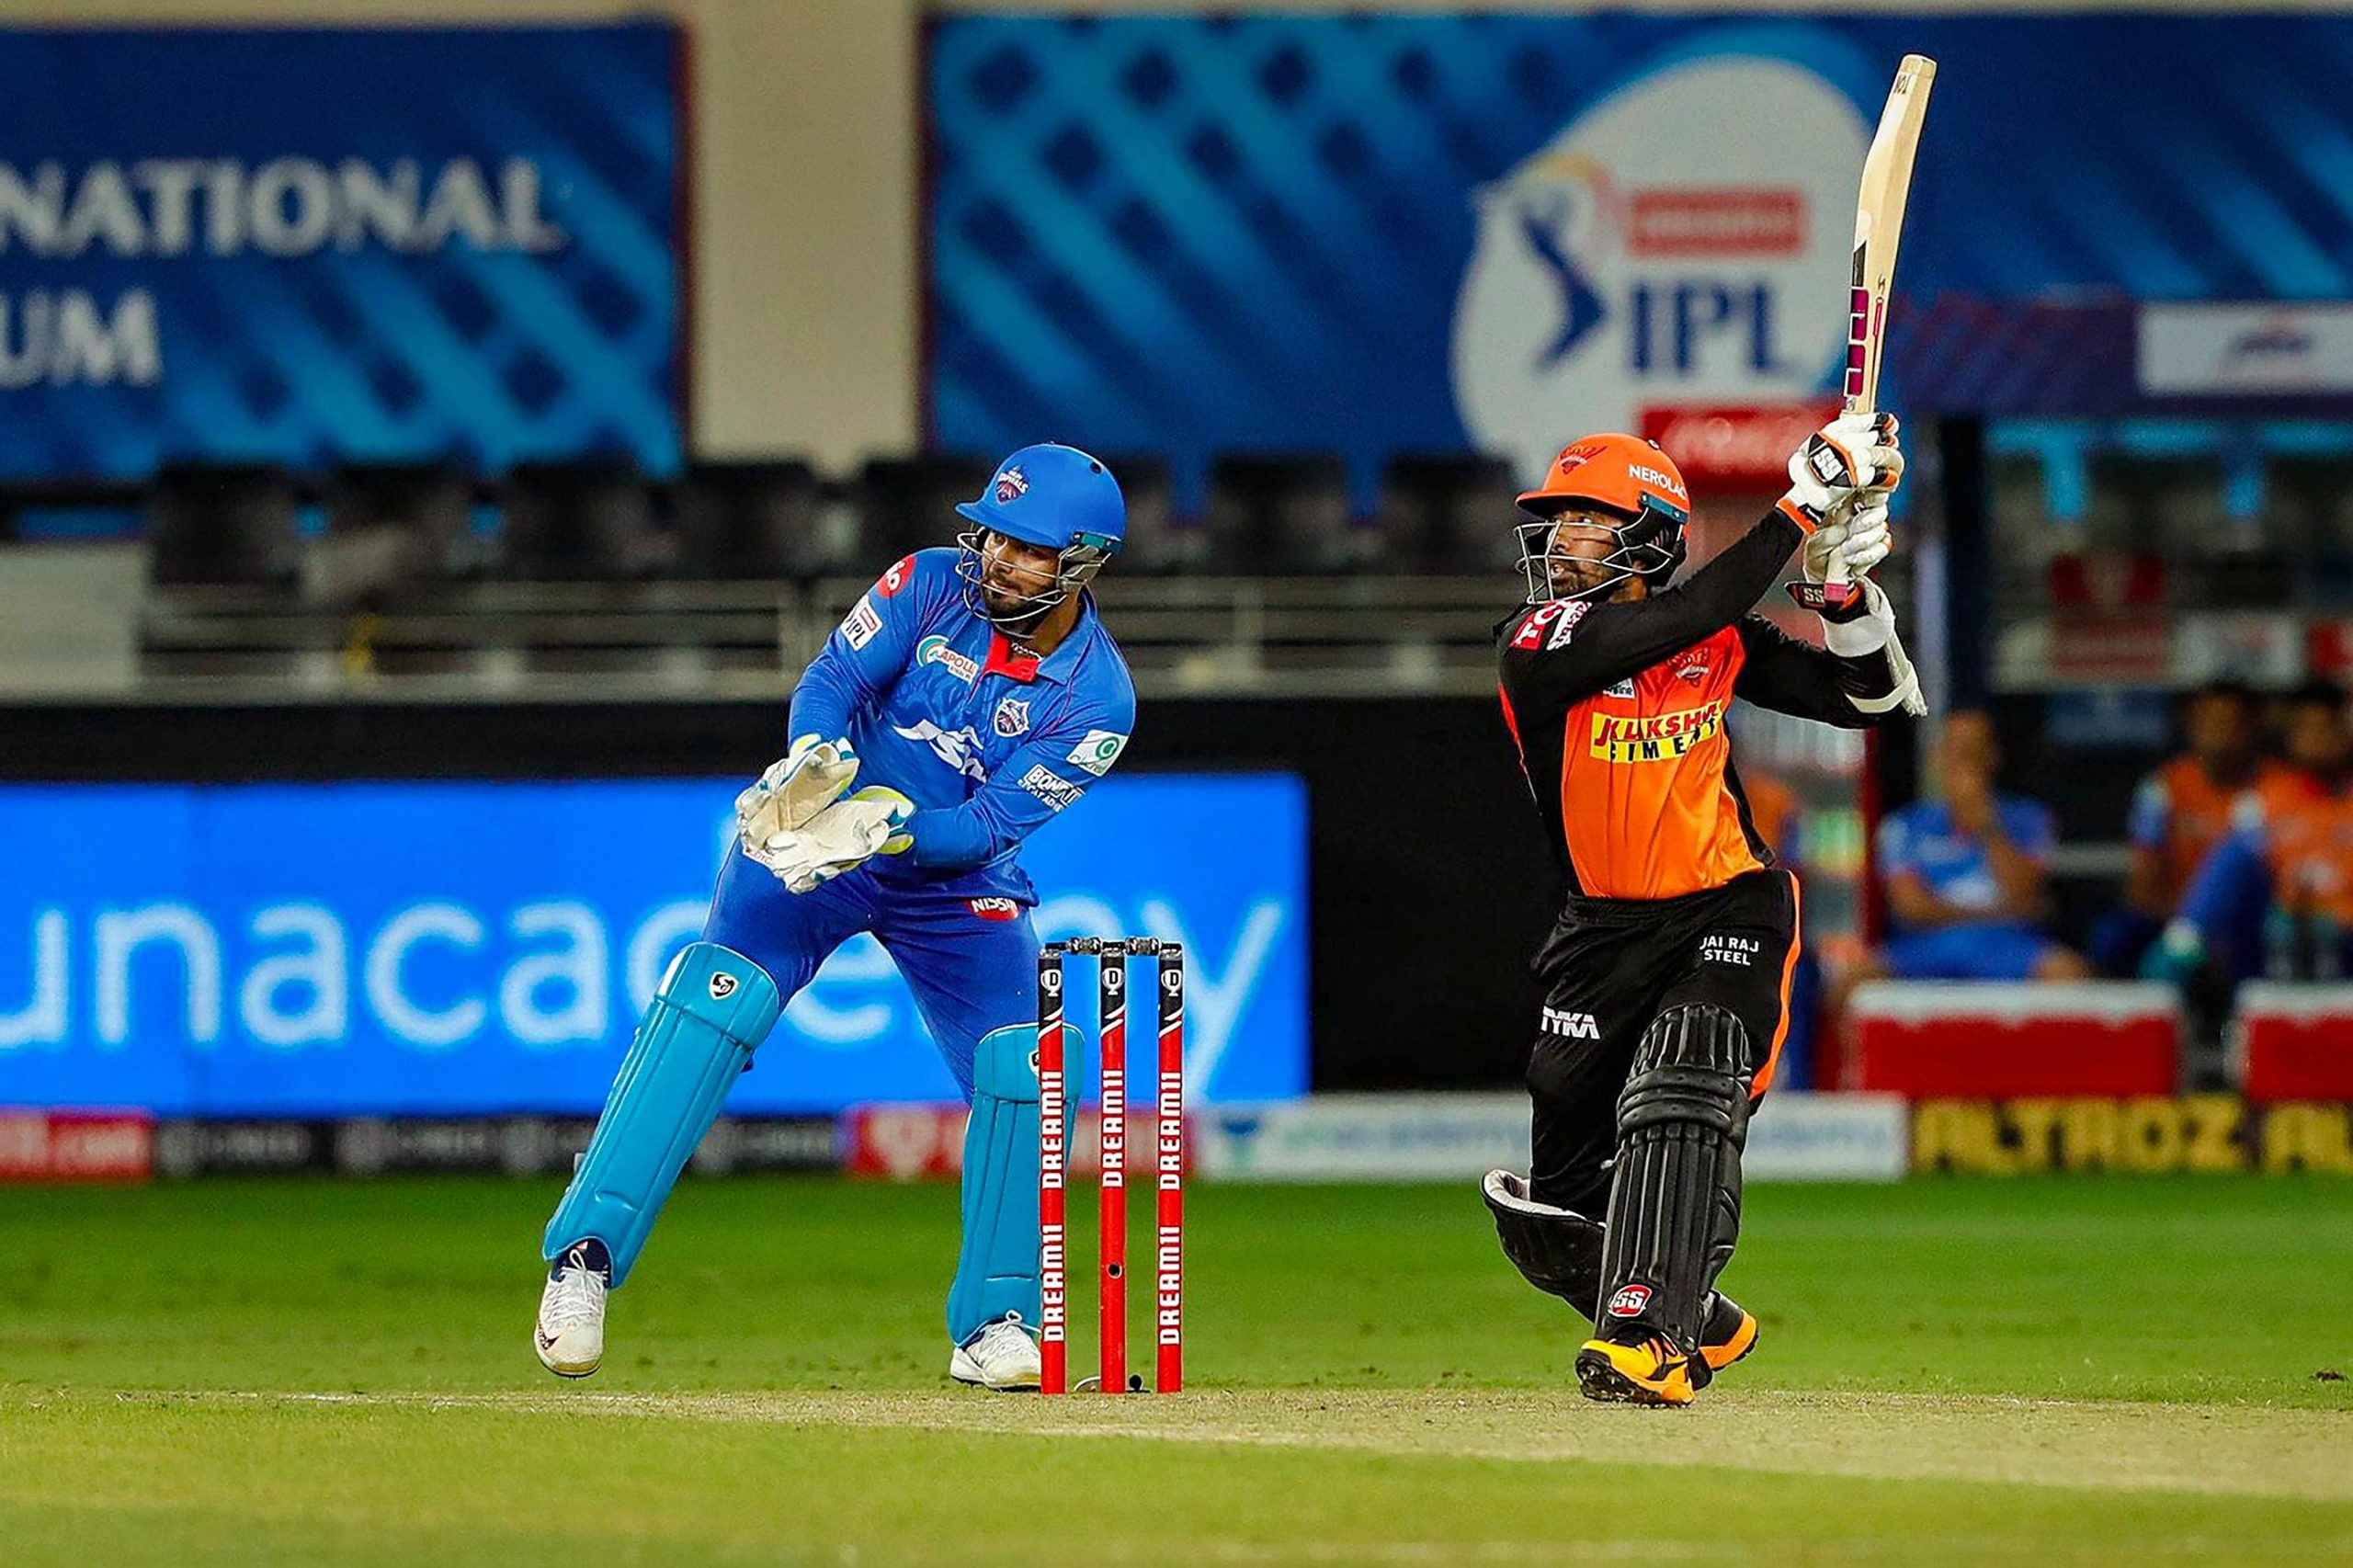 ‘Thoroughly enjoyed watching’: Cricketers in awe of Wriddhiman Saha’s innings